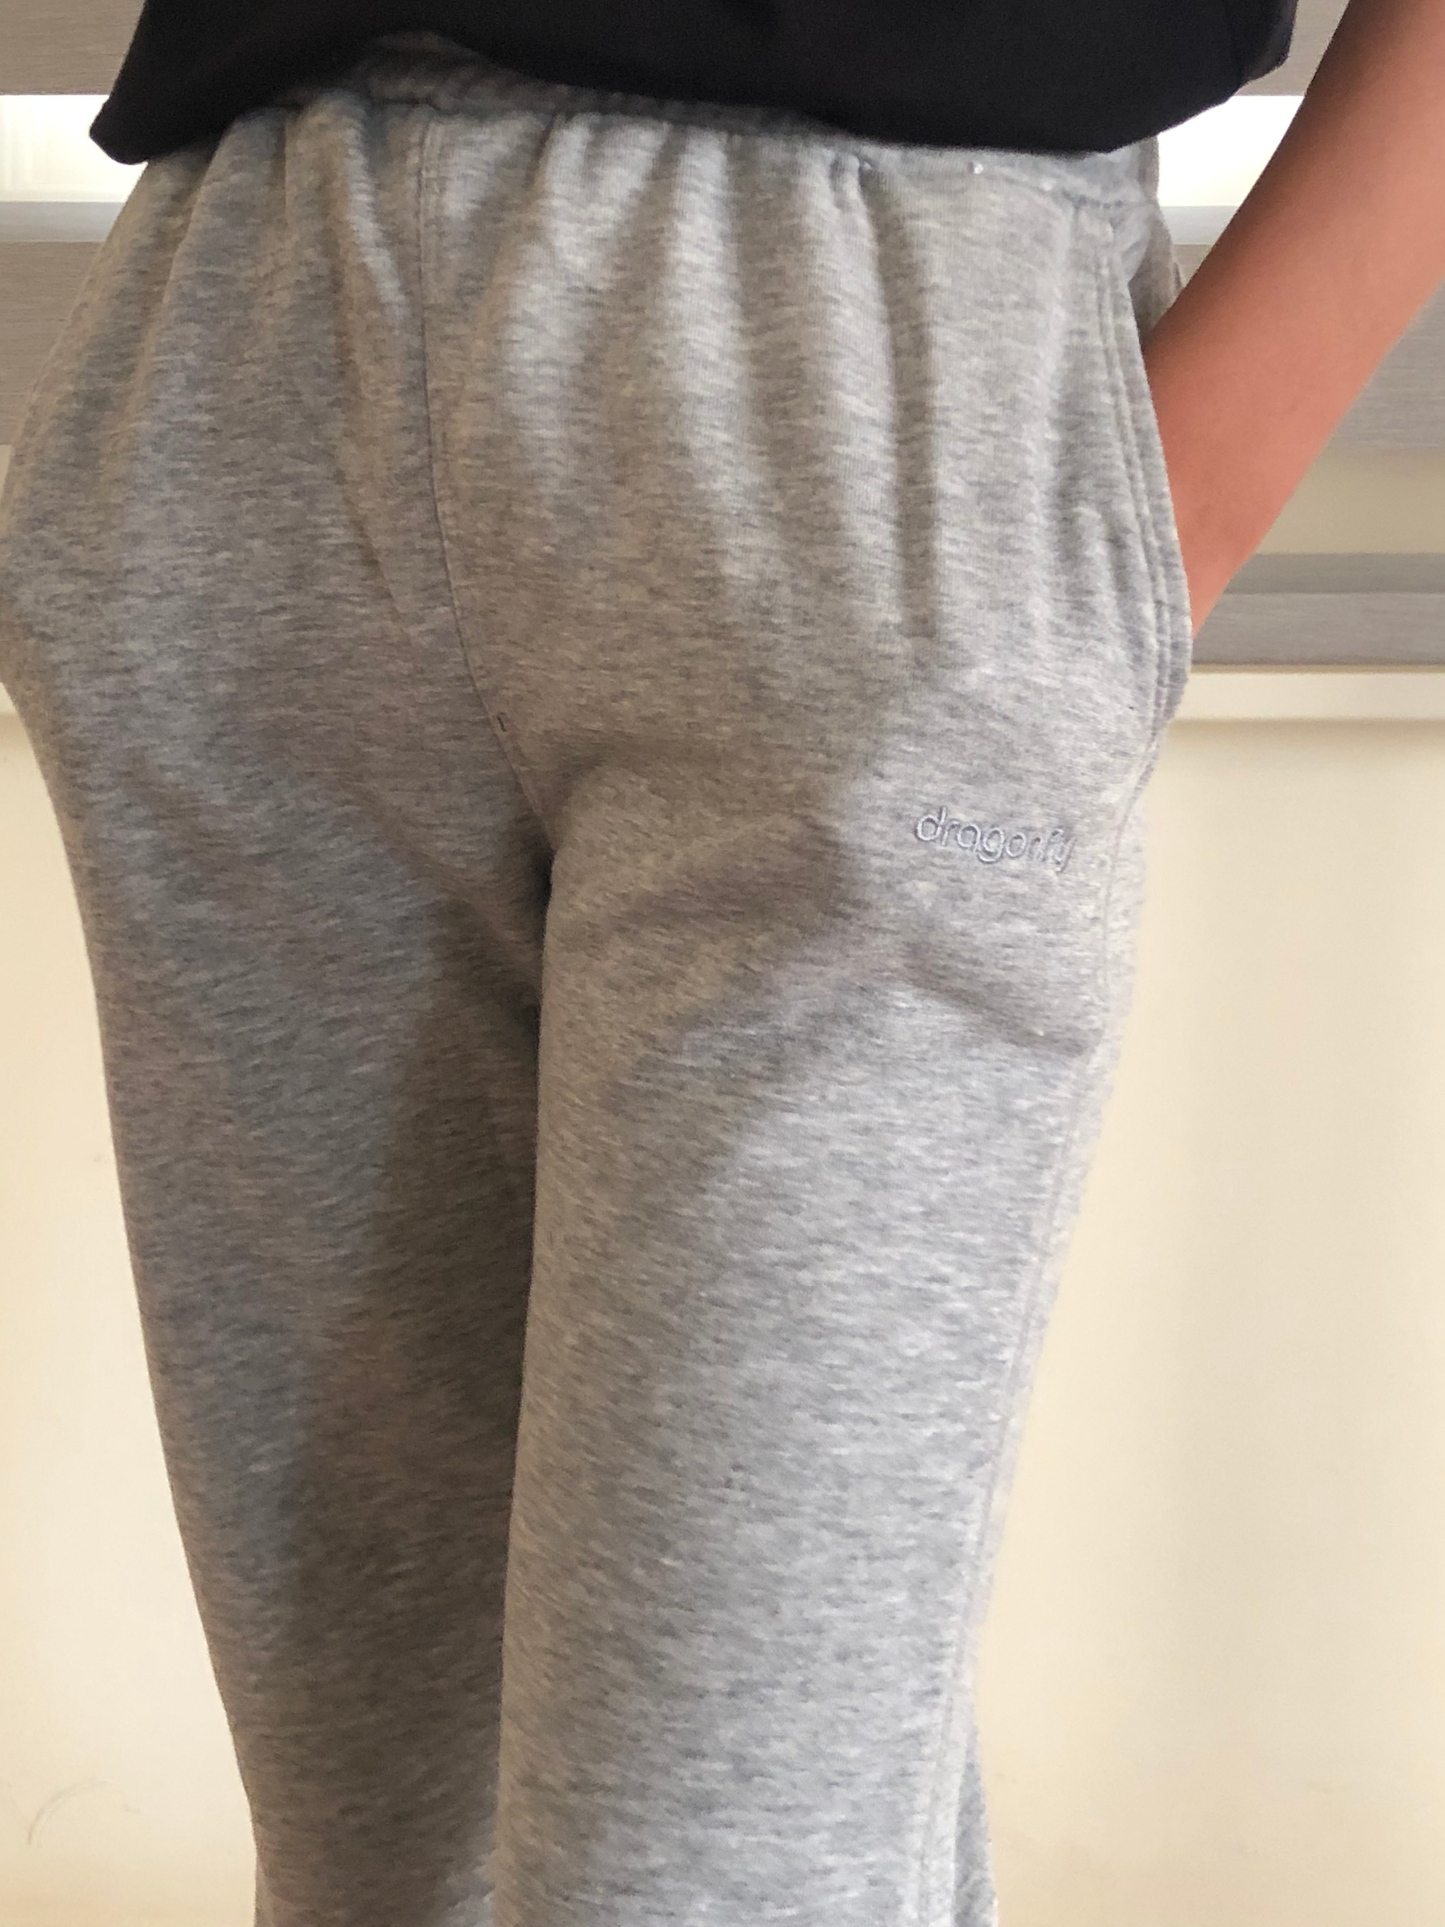 Grey Sweatpants